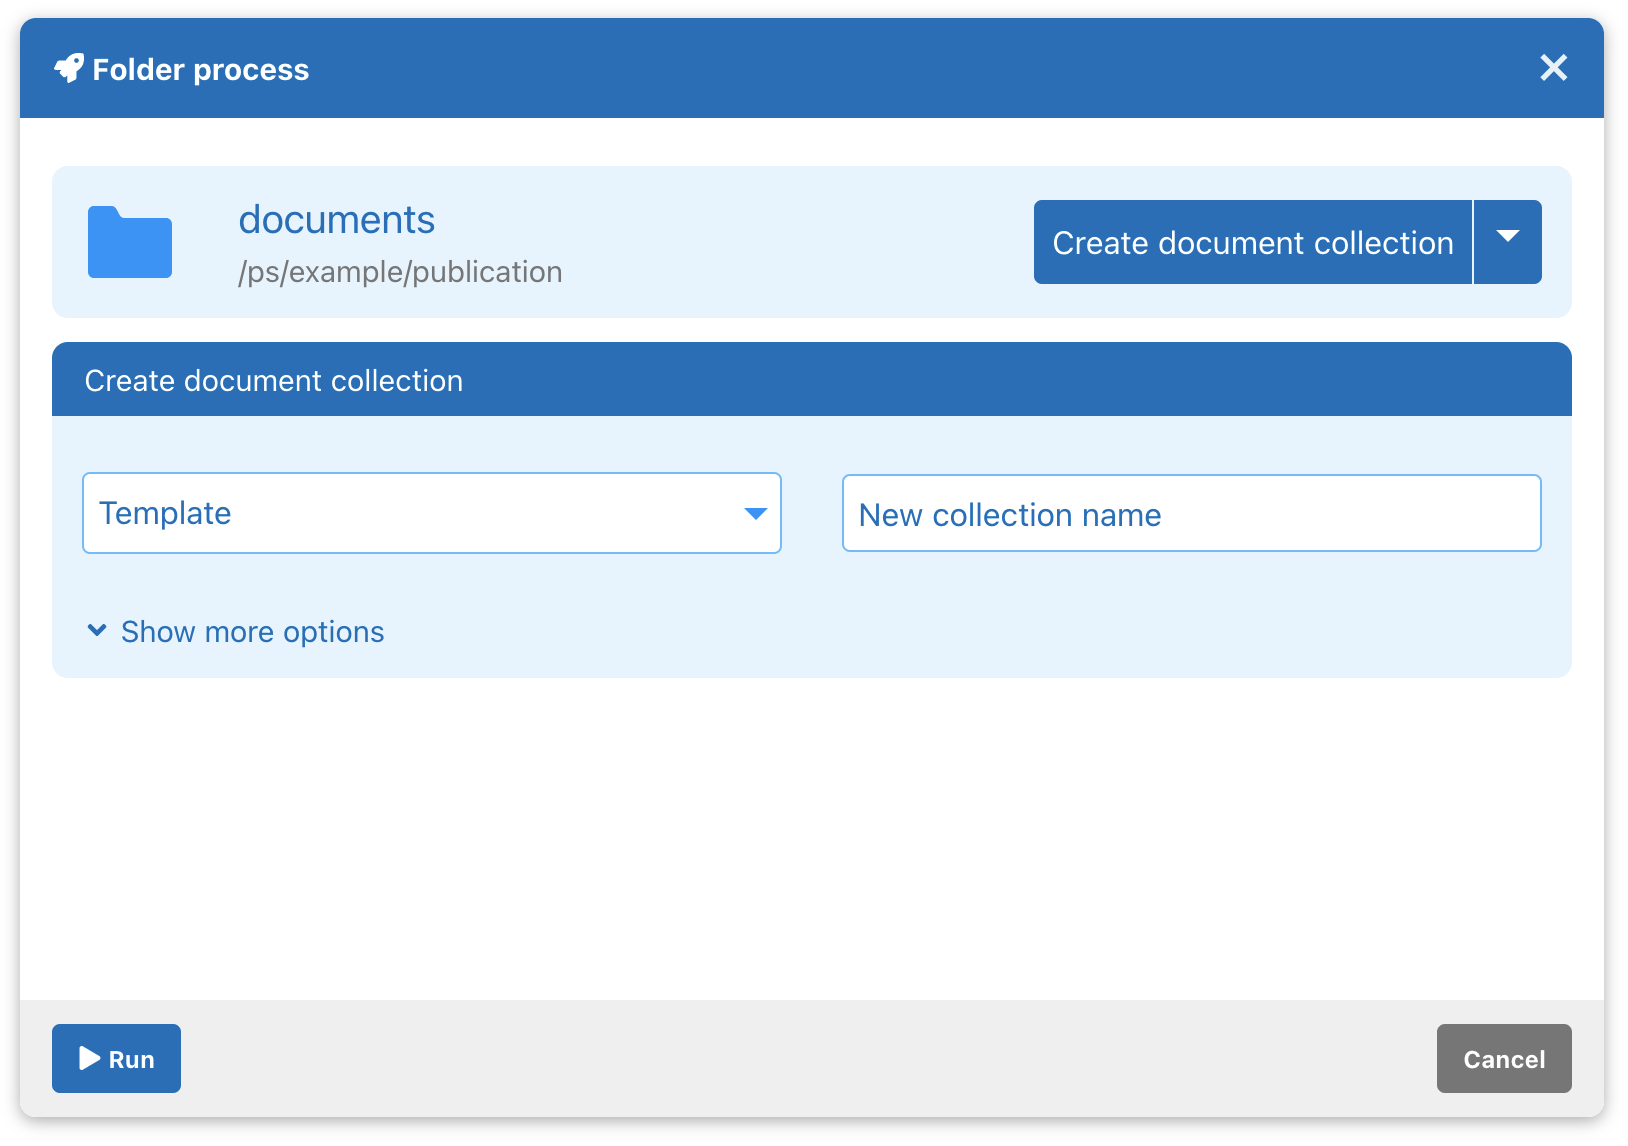 Folder process dialog – Create document collection